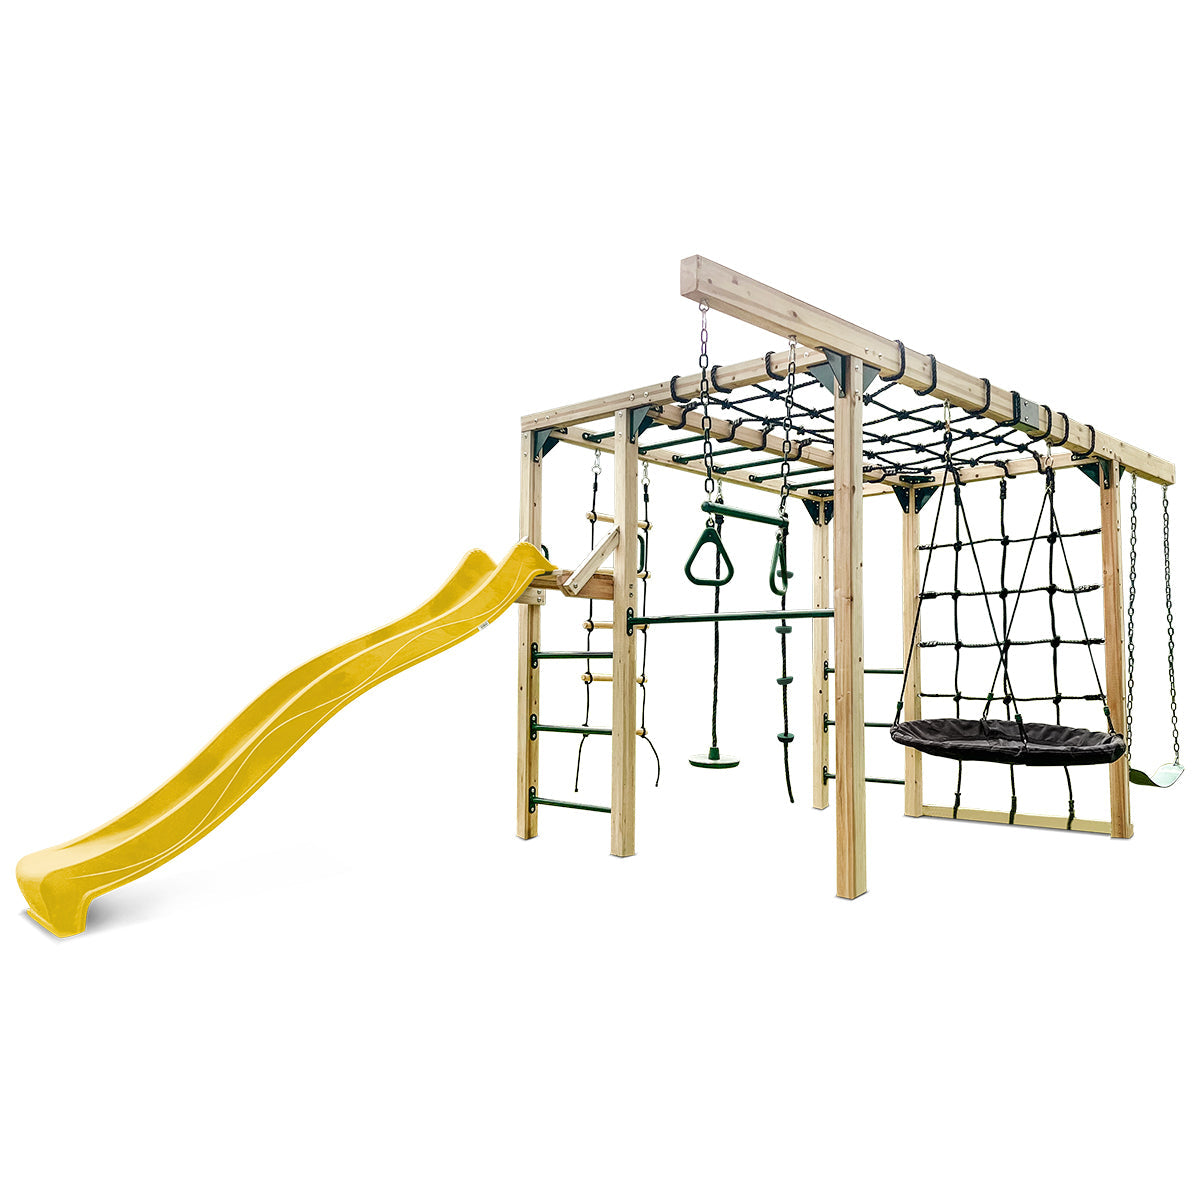 Lifespan Kids Orangutan Climbing Cube Play Centre (Yellow Slide)